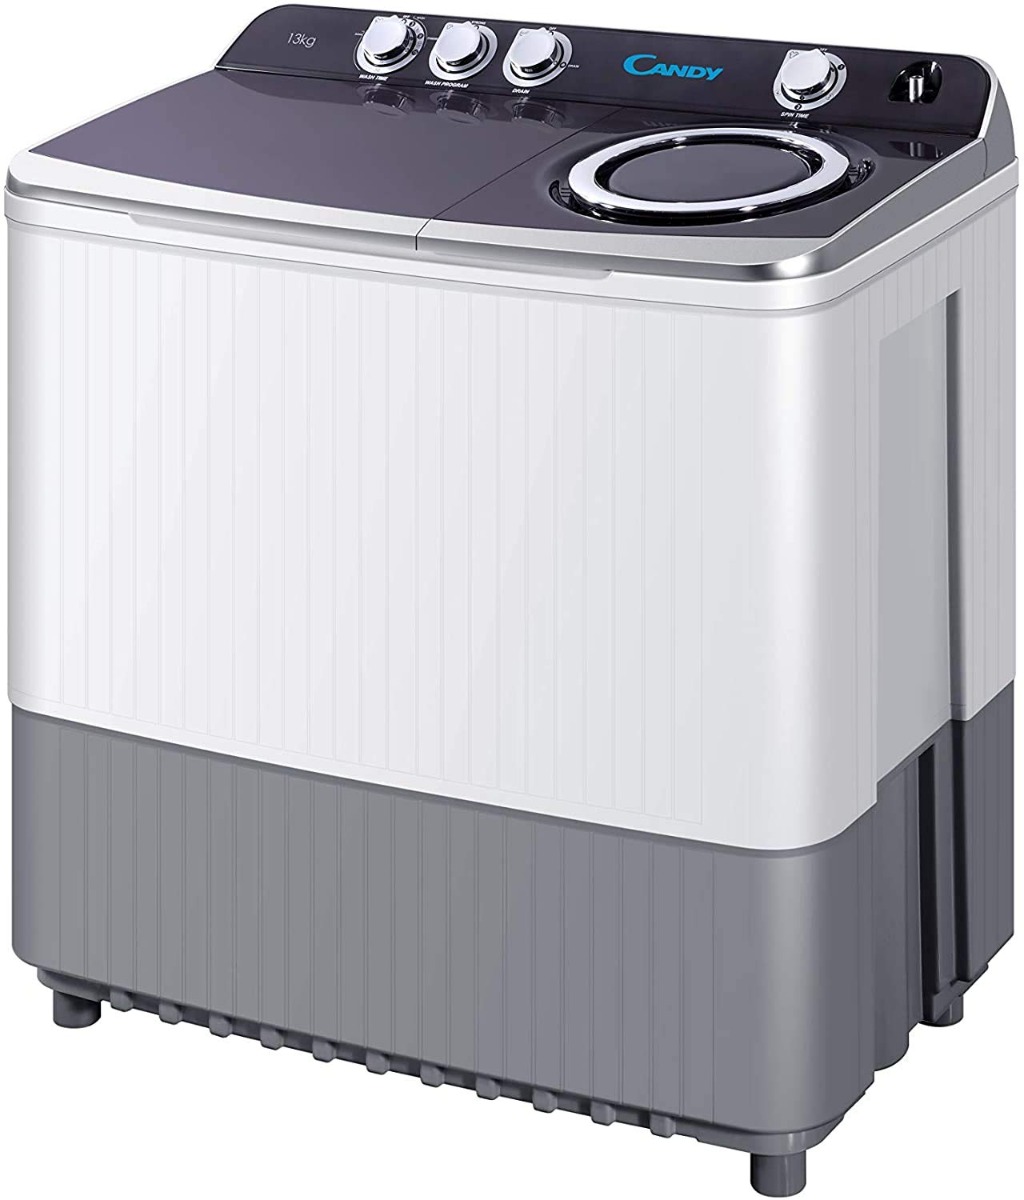 CANDY Twin Tub Washing Machine 13 Kg, white, RTT 2131WSZ-19